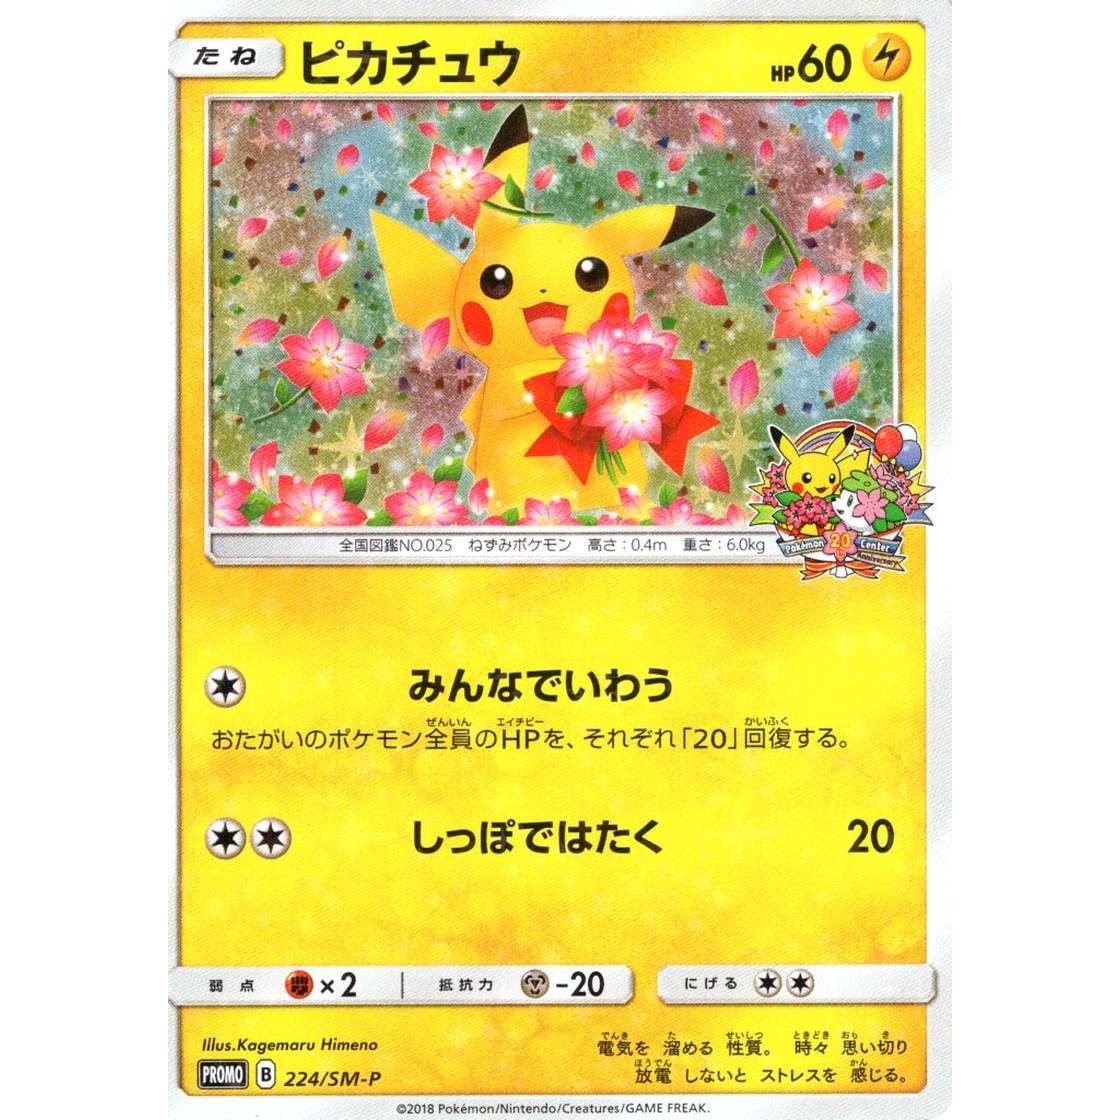 Pikachu Images: Pokemon 20th Anniversary Pikachu Card